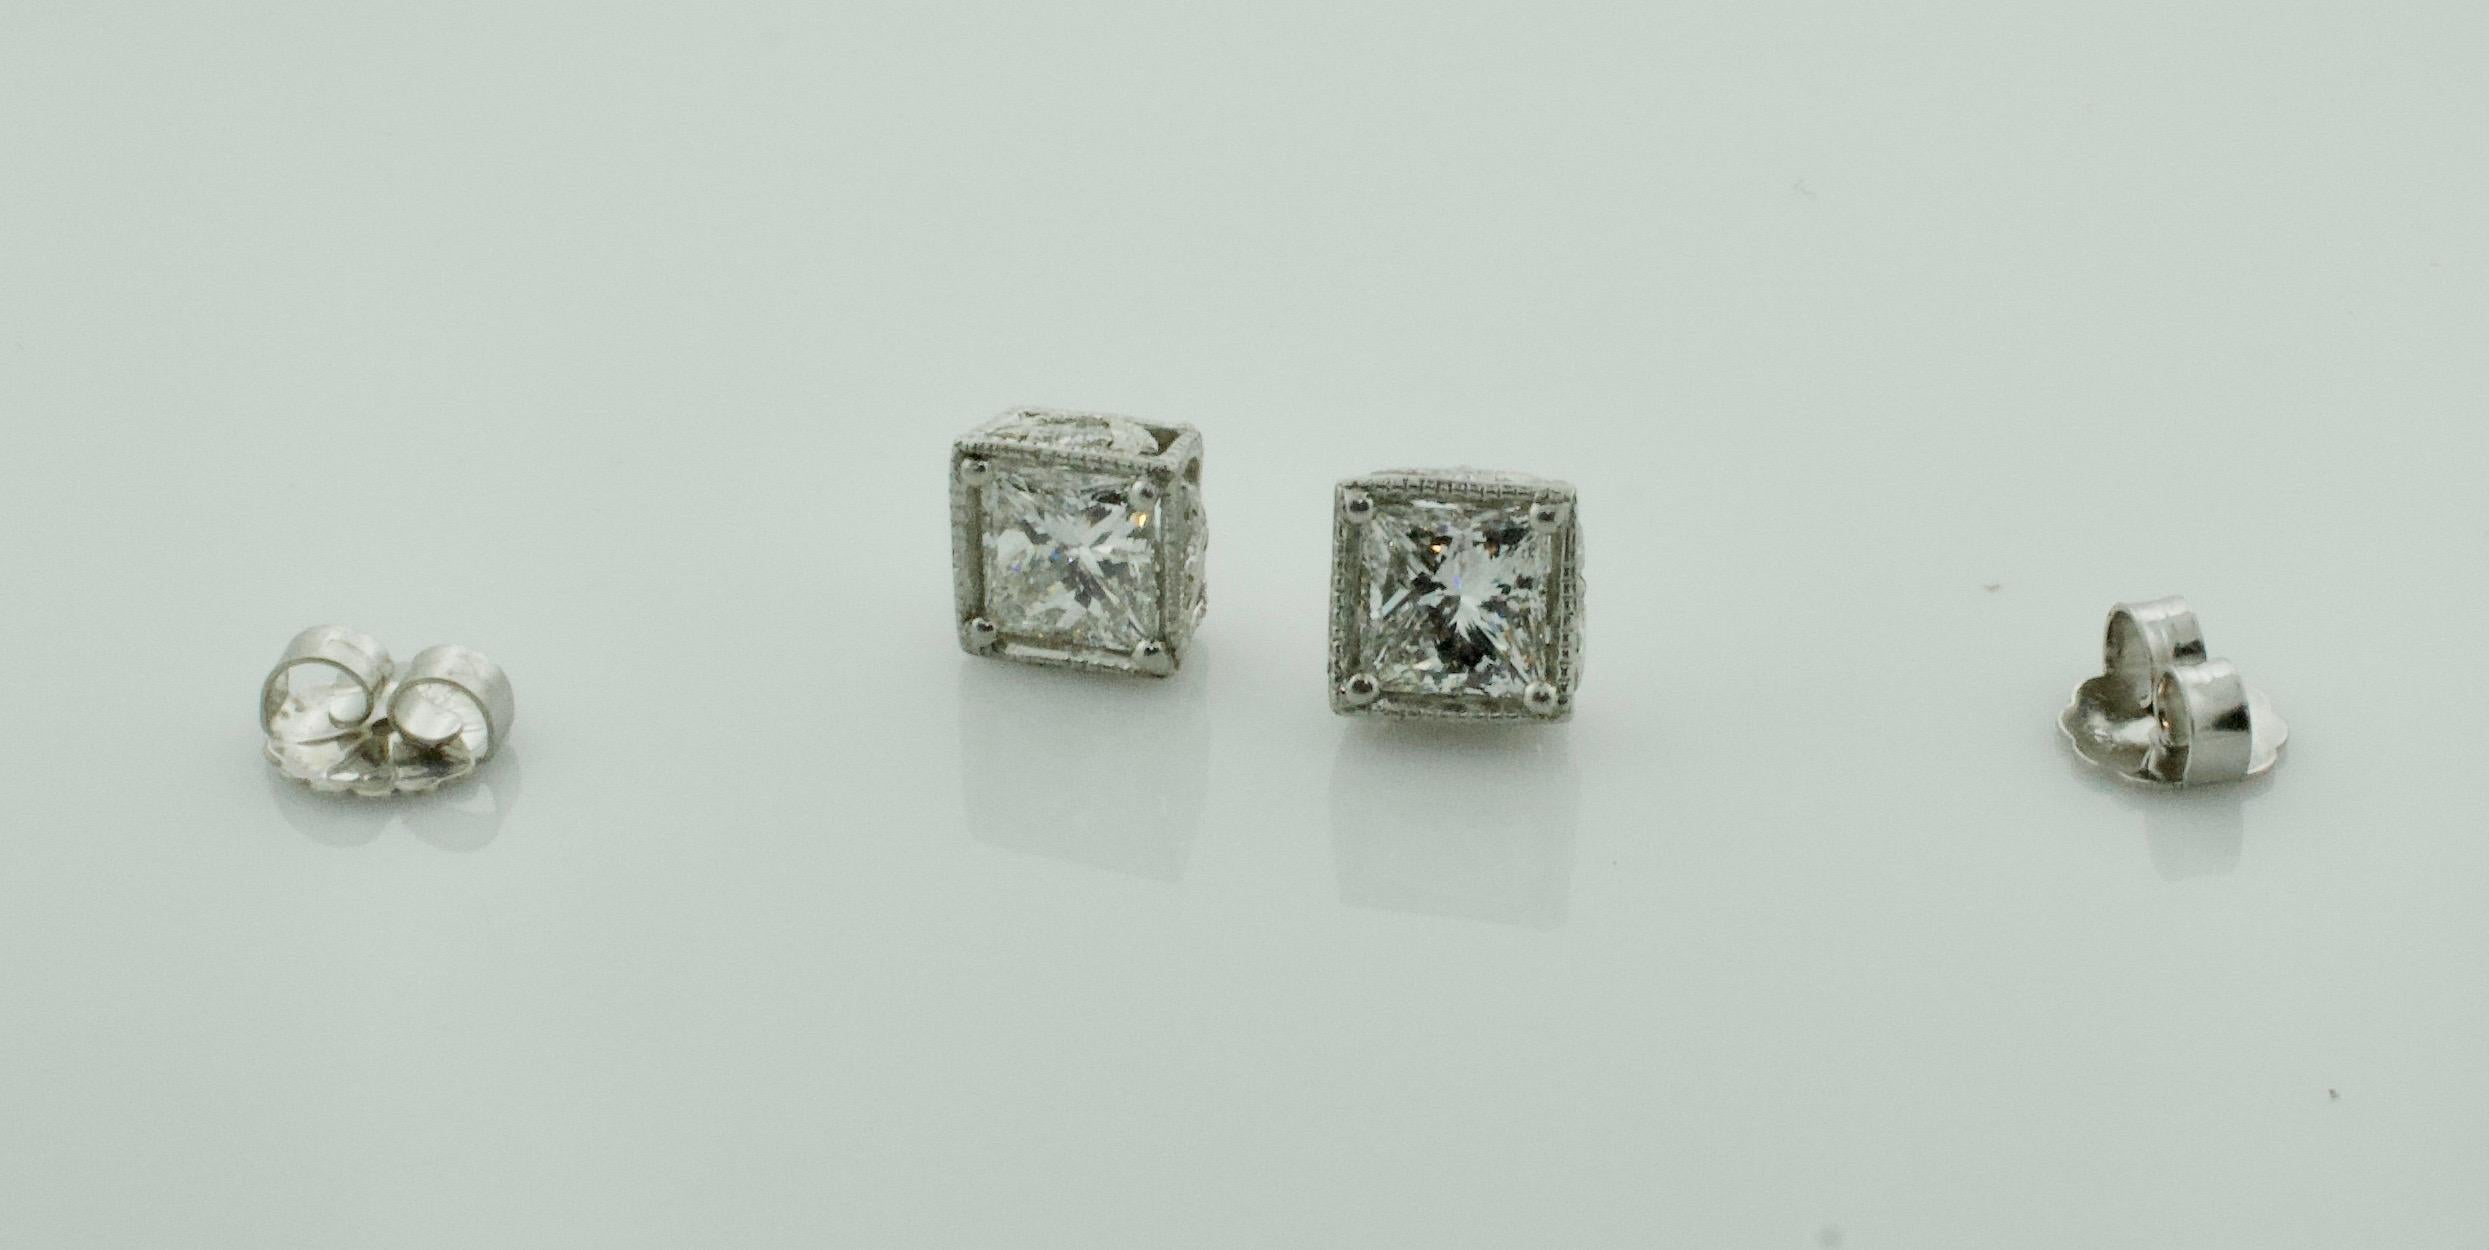 Large Princess Cut Diamond Stud Earrings in Platinum 5.10 Carat H-I SI1 GIA 1